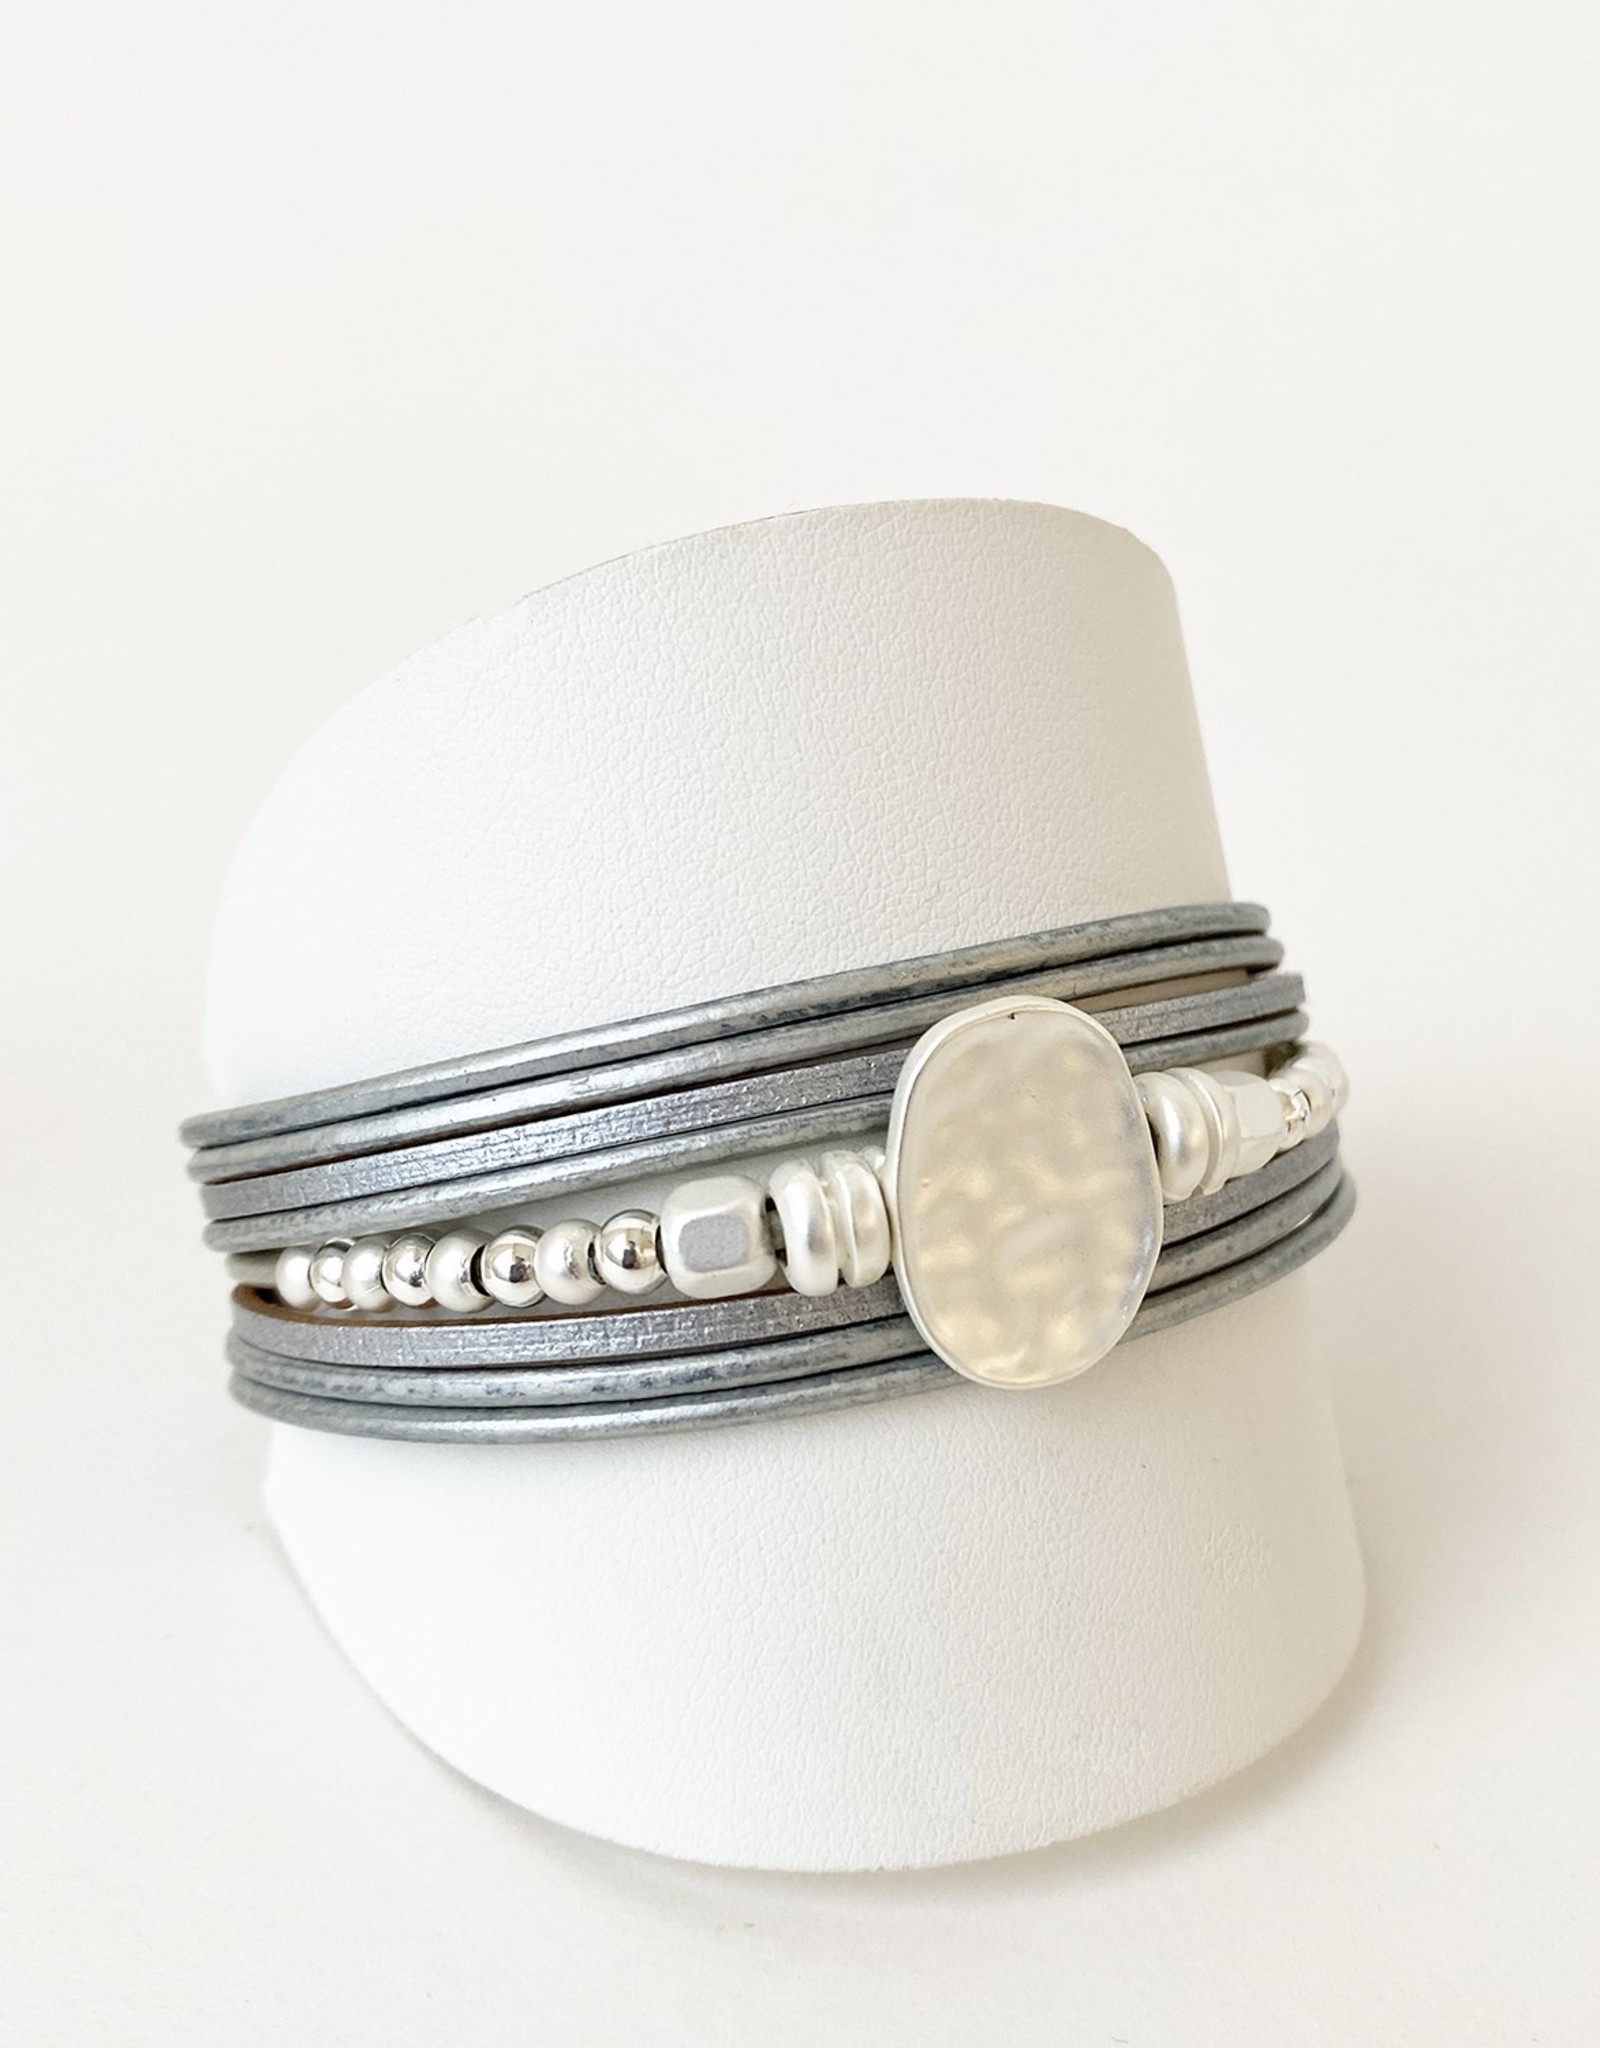 Grey, Silver & Hematite Multi Strand Leather Bracelet with Metal Beads